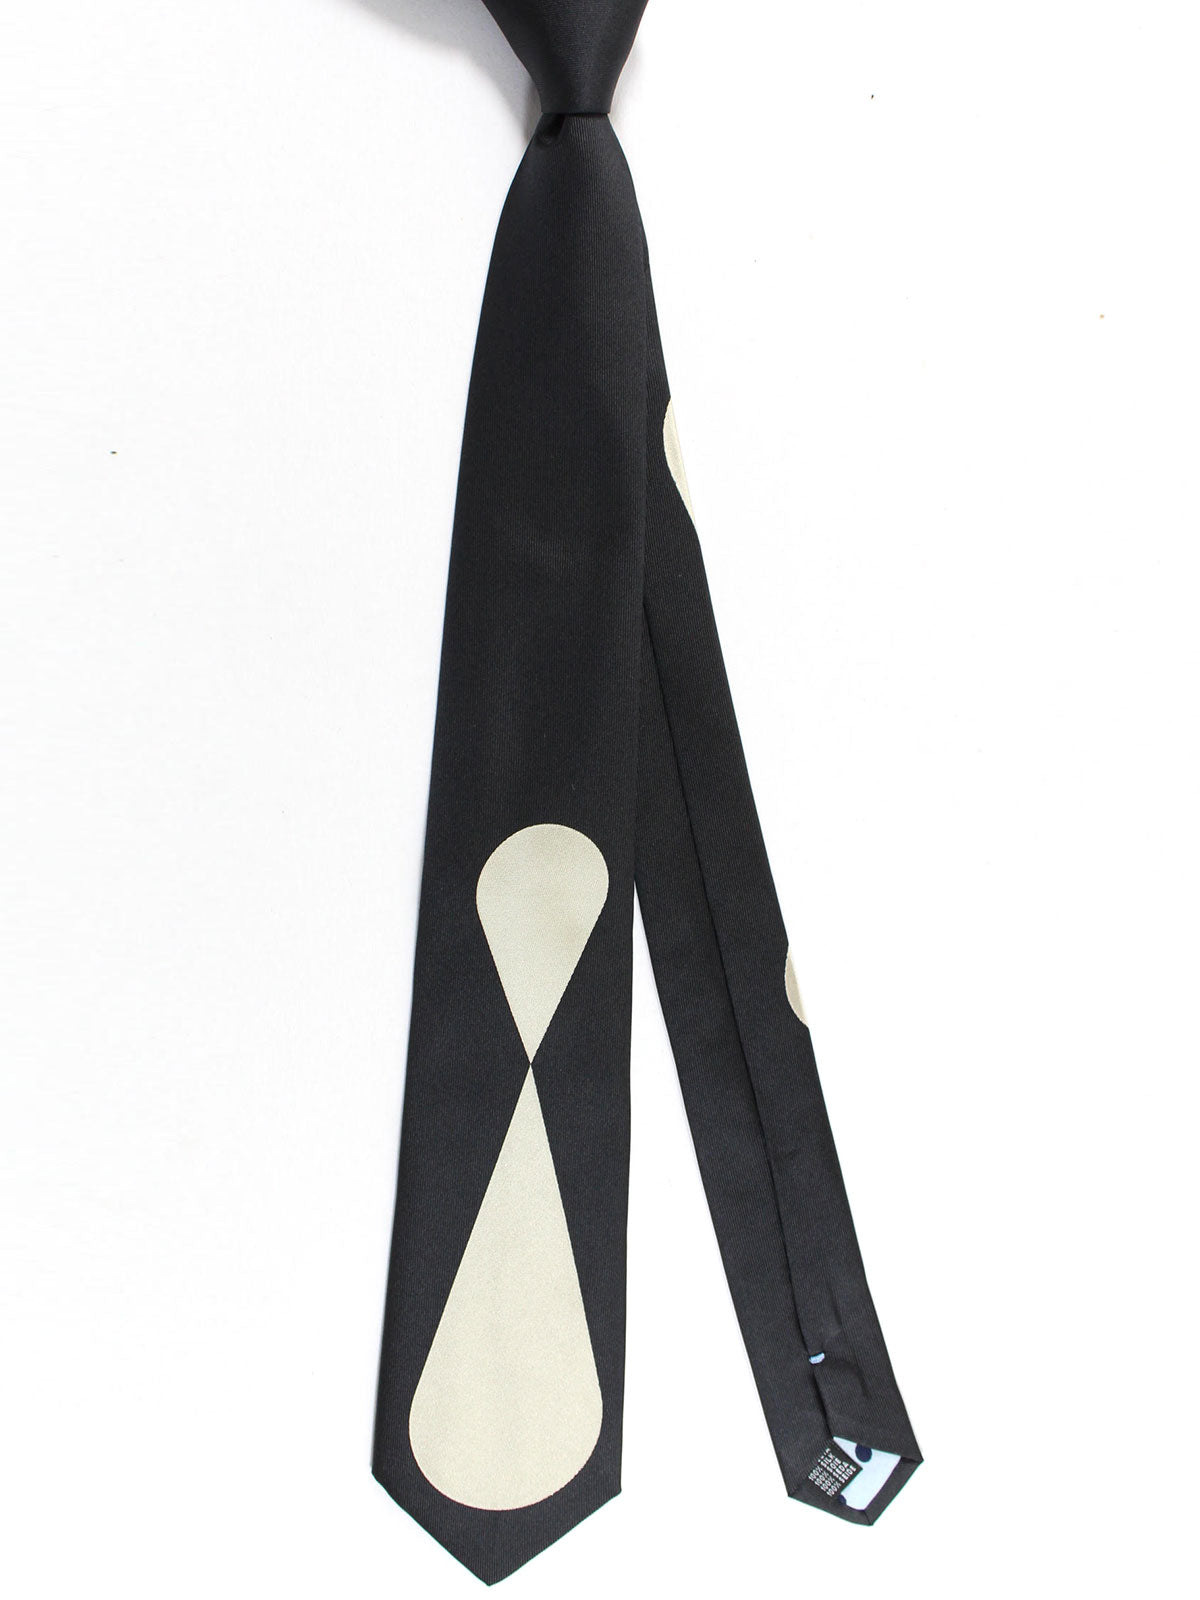 Gene Meyer Tie Black Silver Geometric Design - Hand Made in Italy